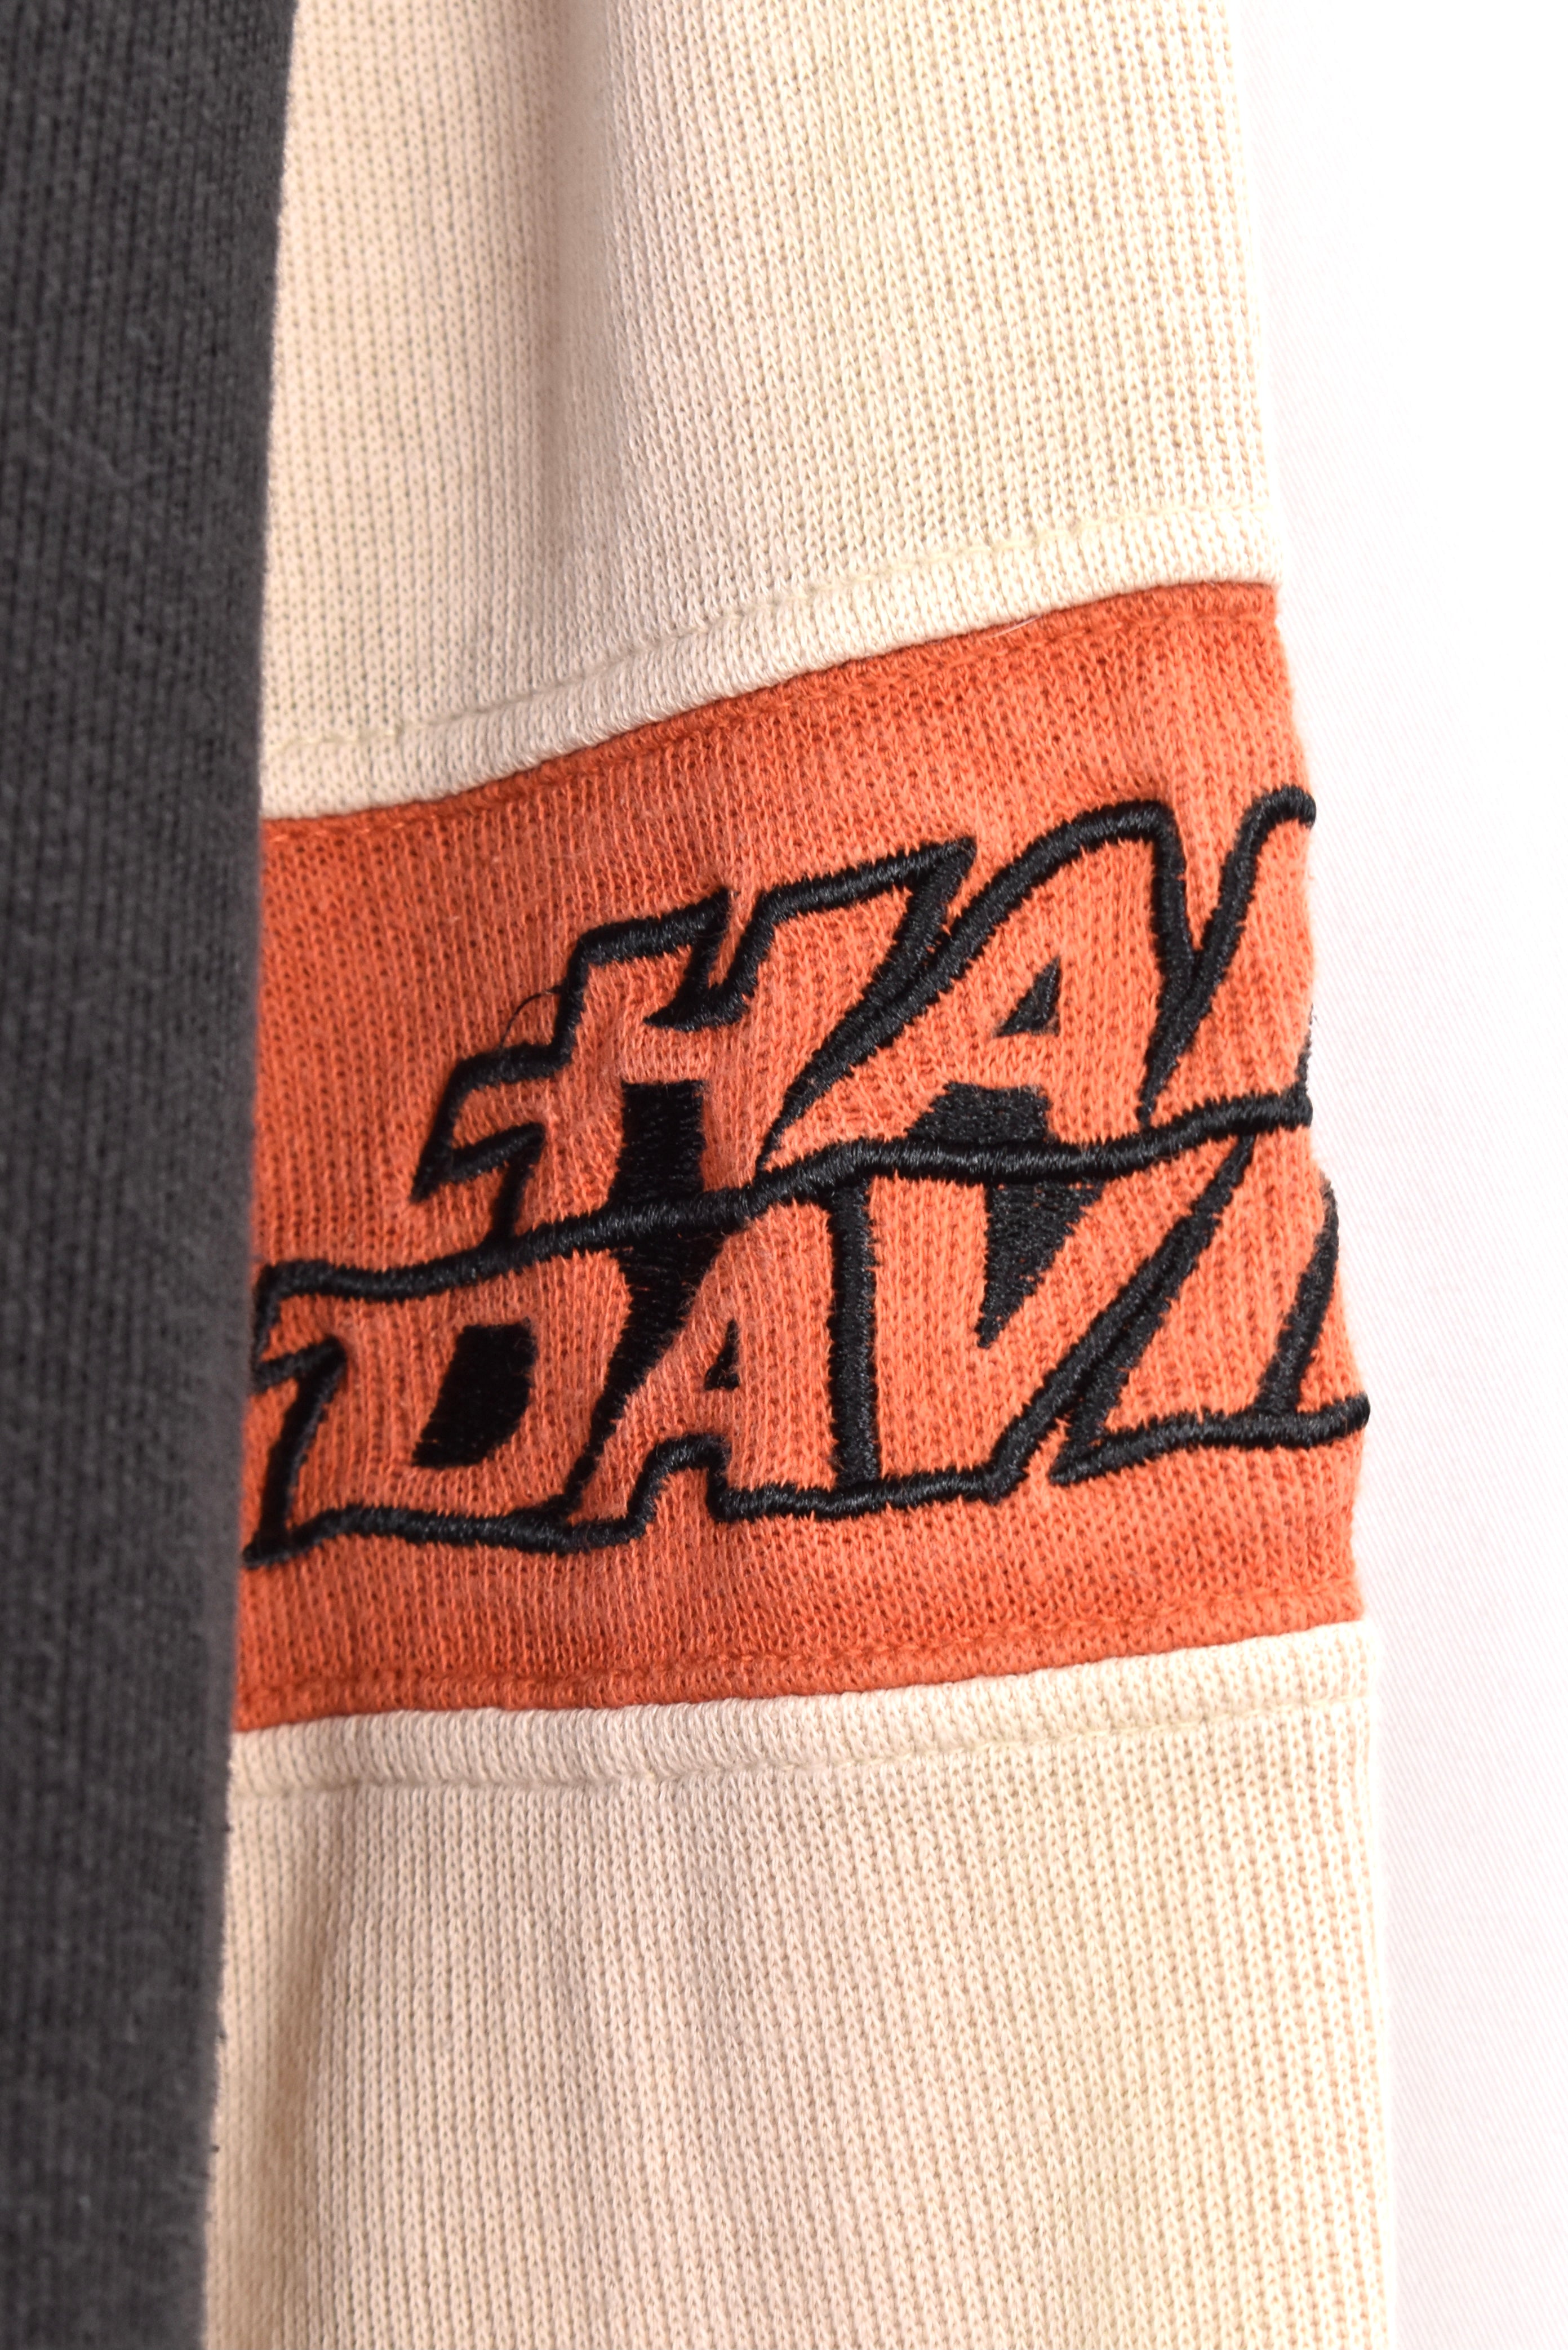 Vintage Women's Harley Davidson embroidered black sweatshirt | XL HARLEY DAVIDSON